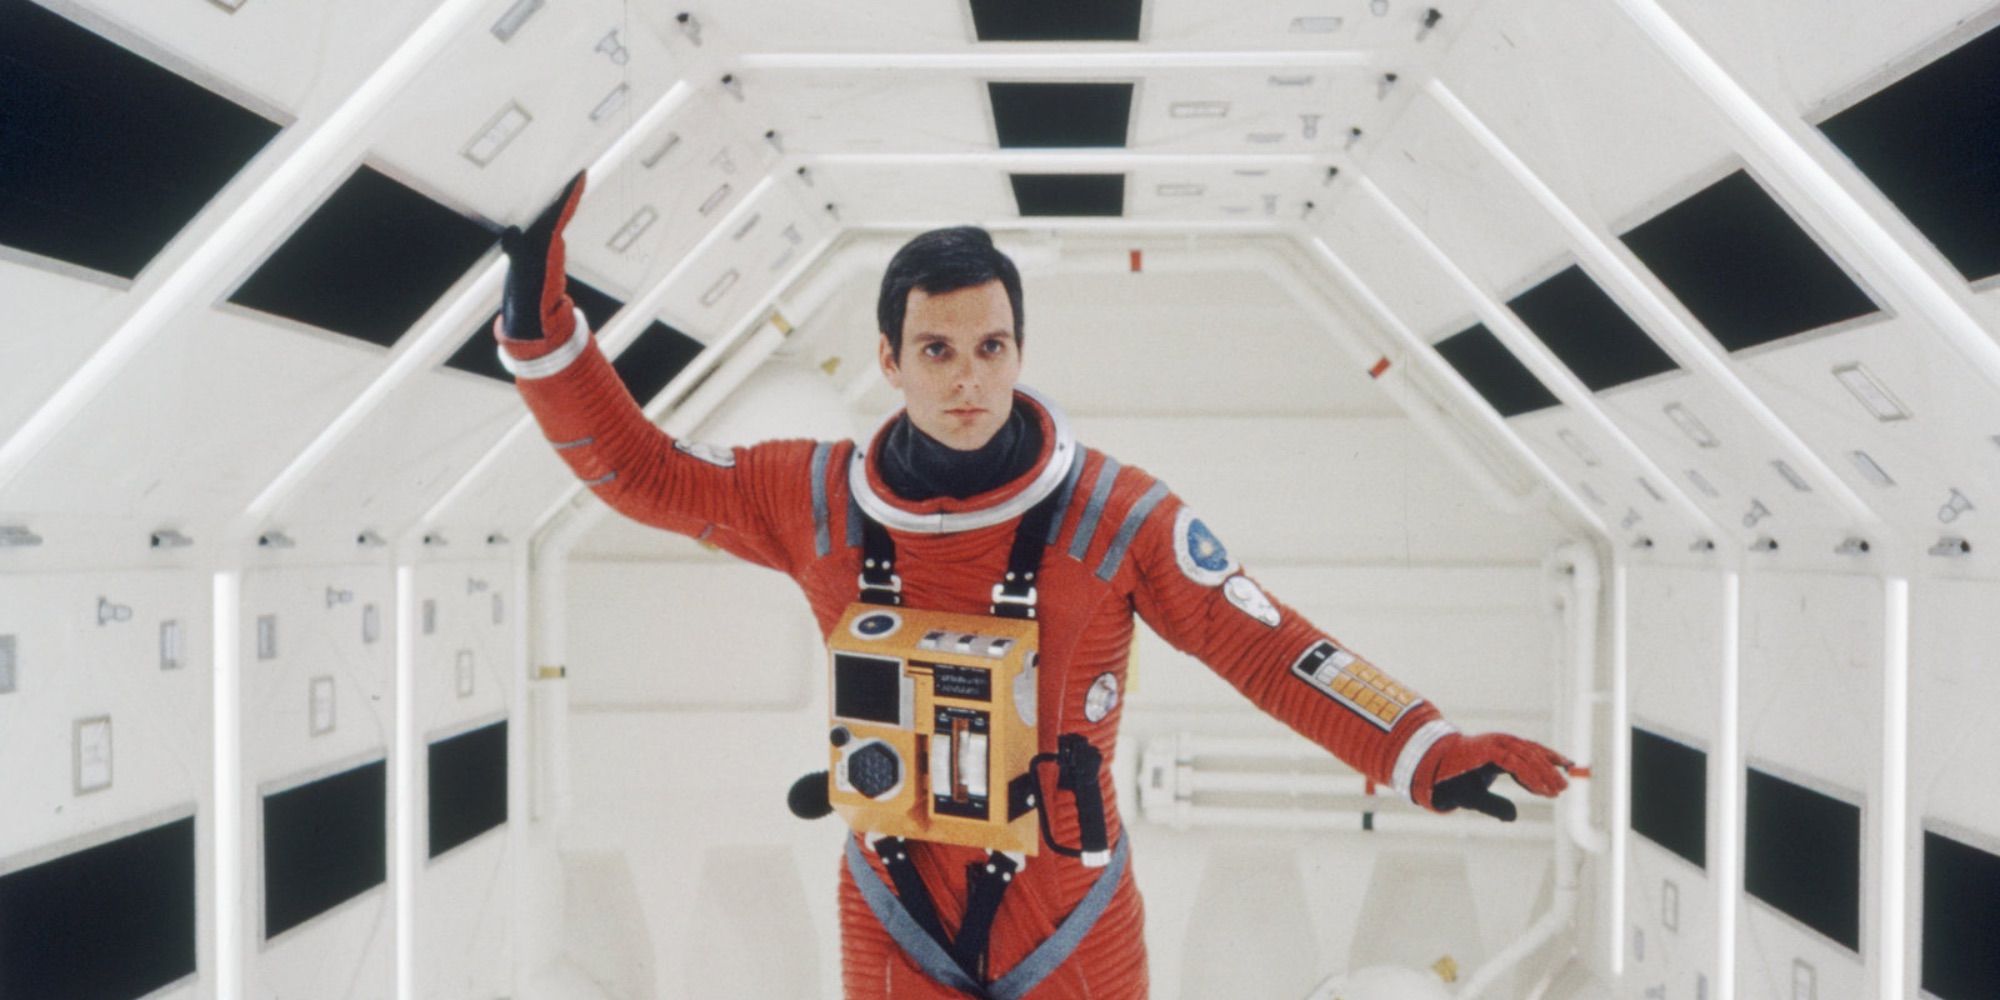 An astronaut walking down a spaceship corridor in 2001: A Space Odyssey.